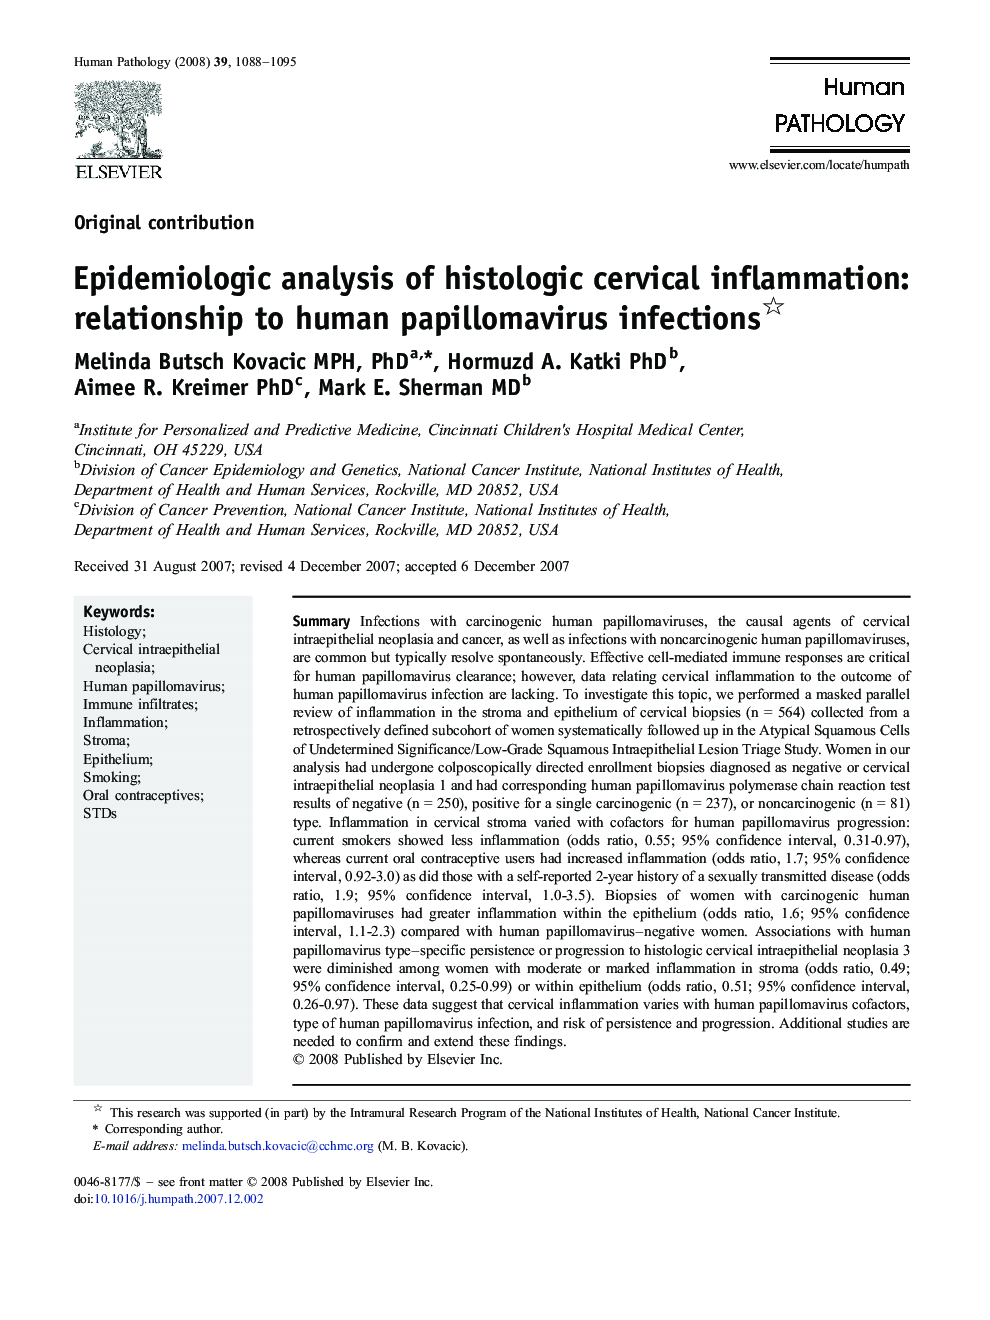 Epidemiologic analysis of histologic cervical inflammation: relationship to human papillomavirus infections 